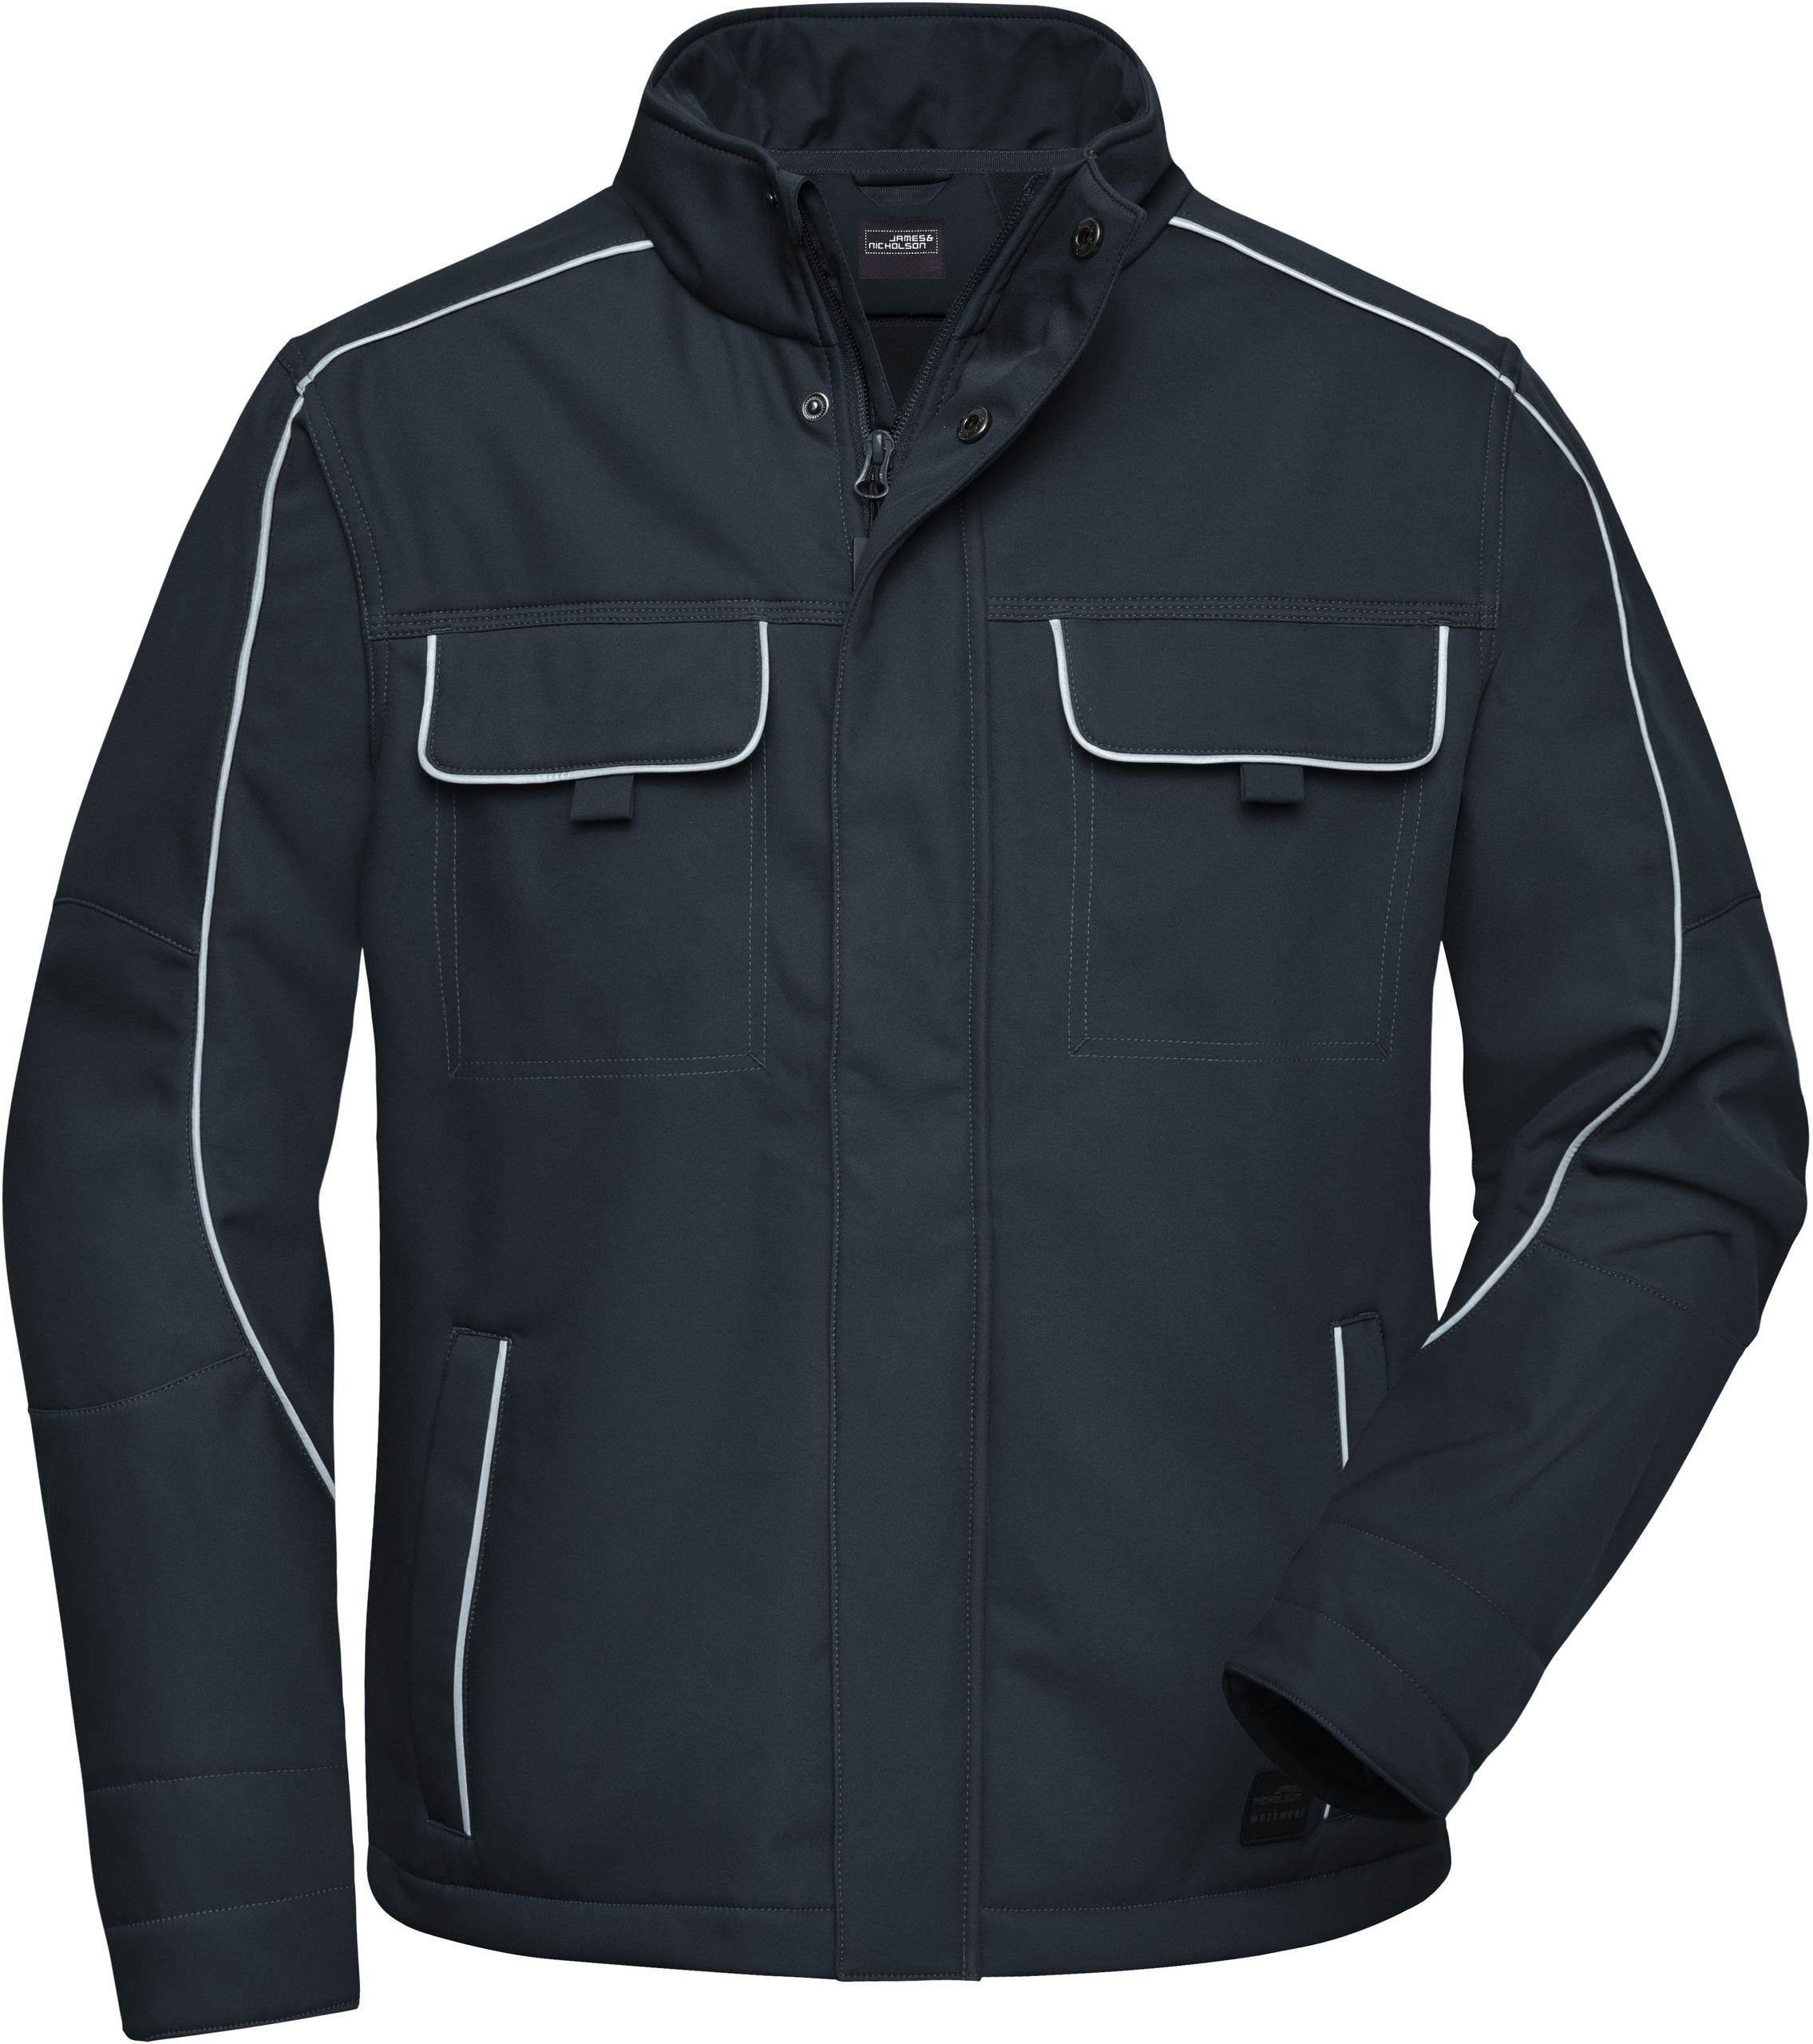 Übergröße Softshell Jacke Workwear FaS50884 in & Carbon Nicholson auch James Softshelljacke